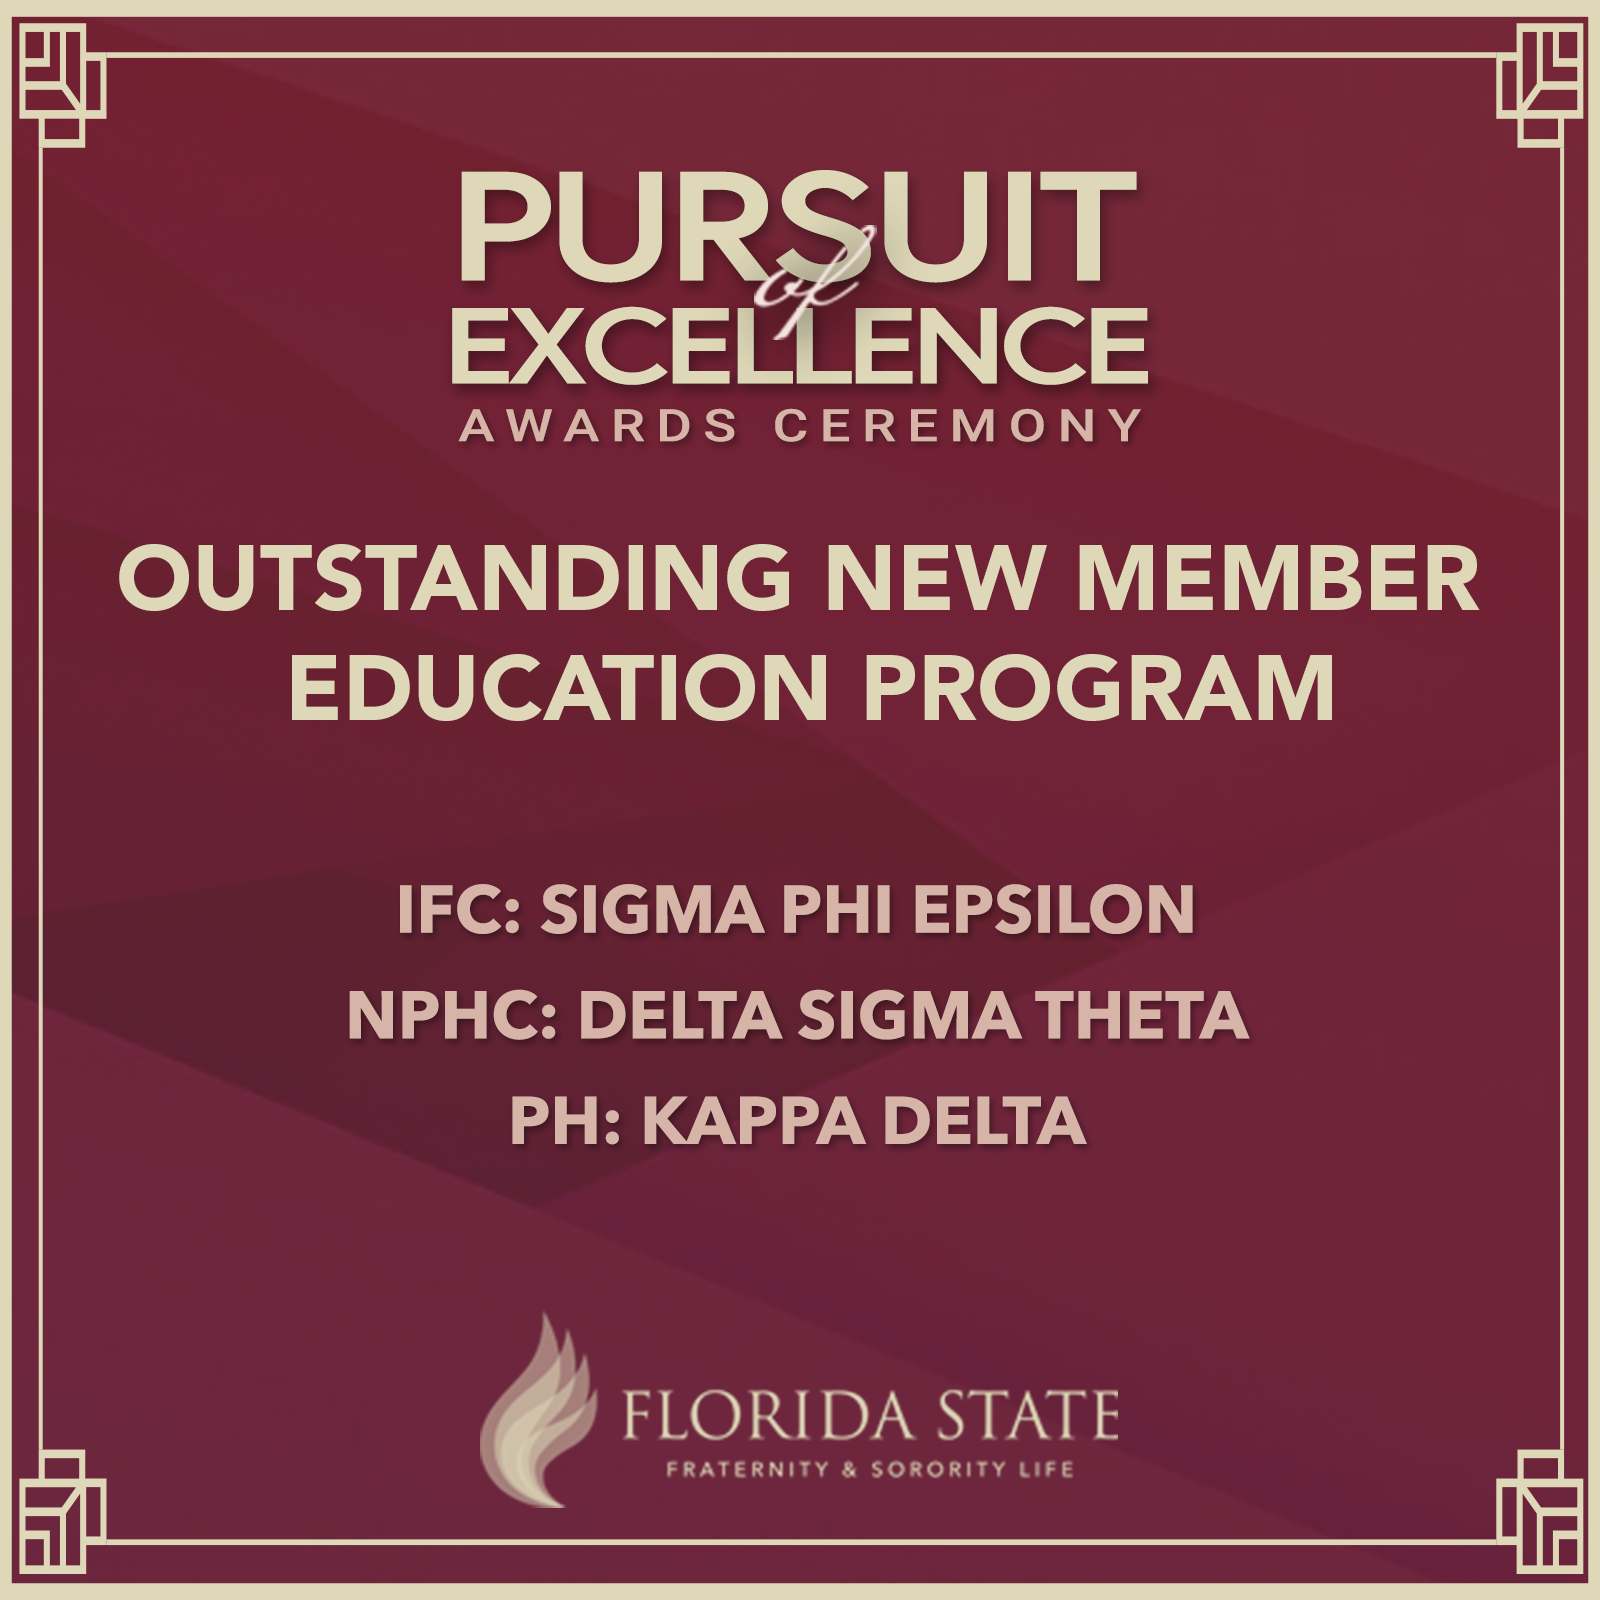 Outstanding New Member Education Program Winners - Sigma Phi Epsilon, Delta Sigma Theta, Kappa Delta